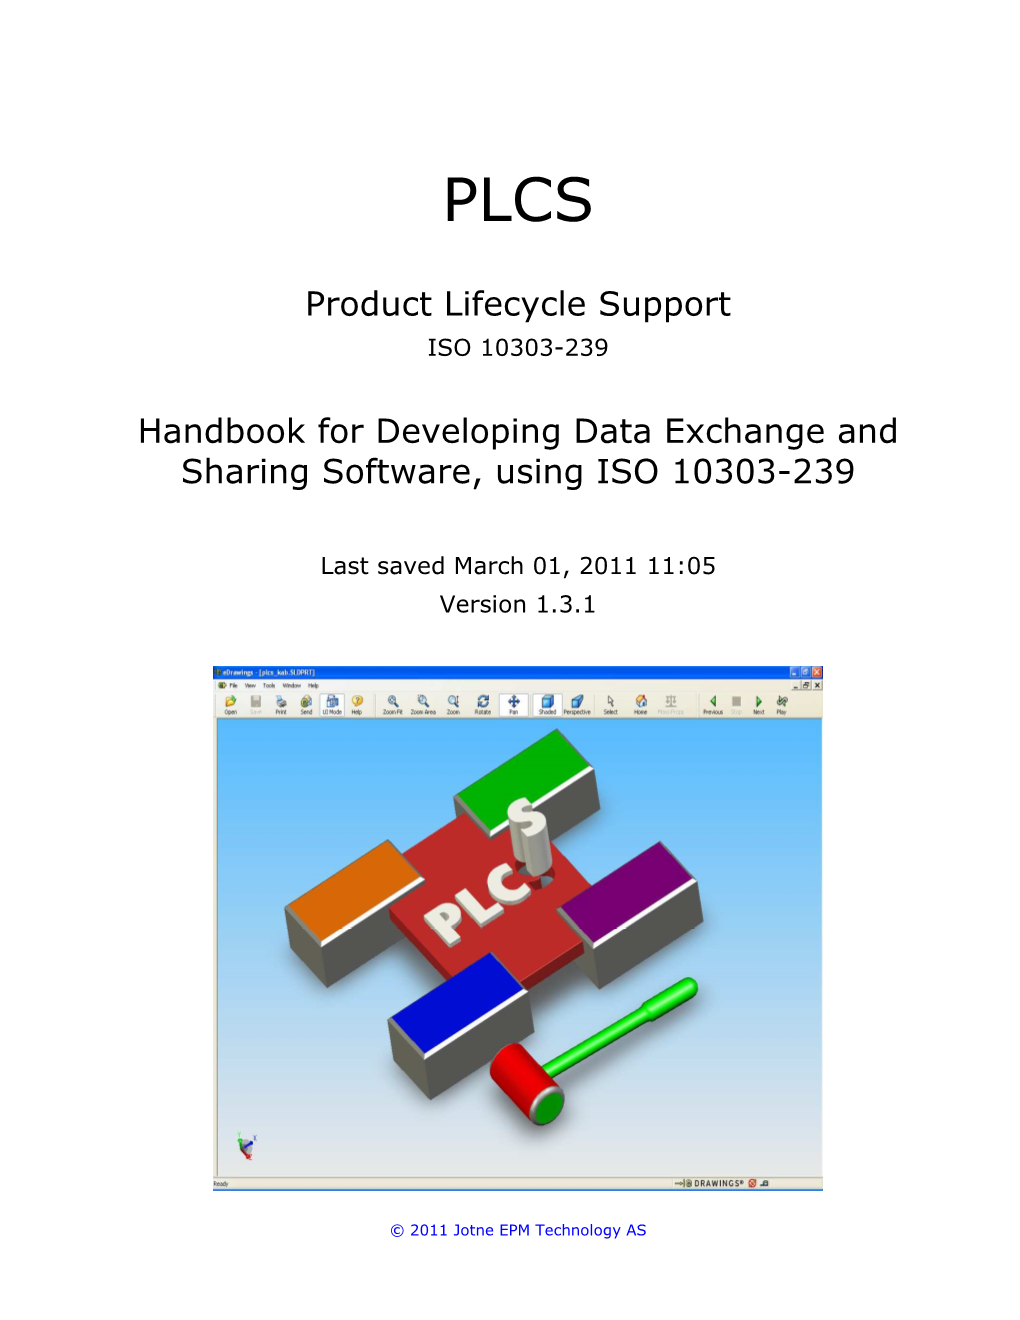 PLCS Handbook for Development Data Exchange Software Draft Vn1